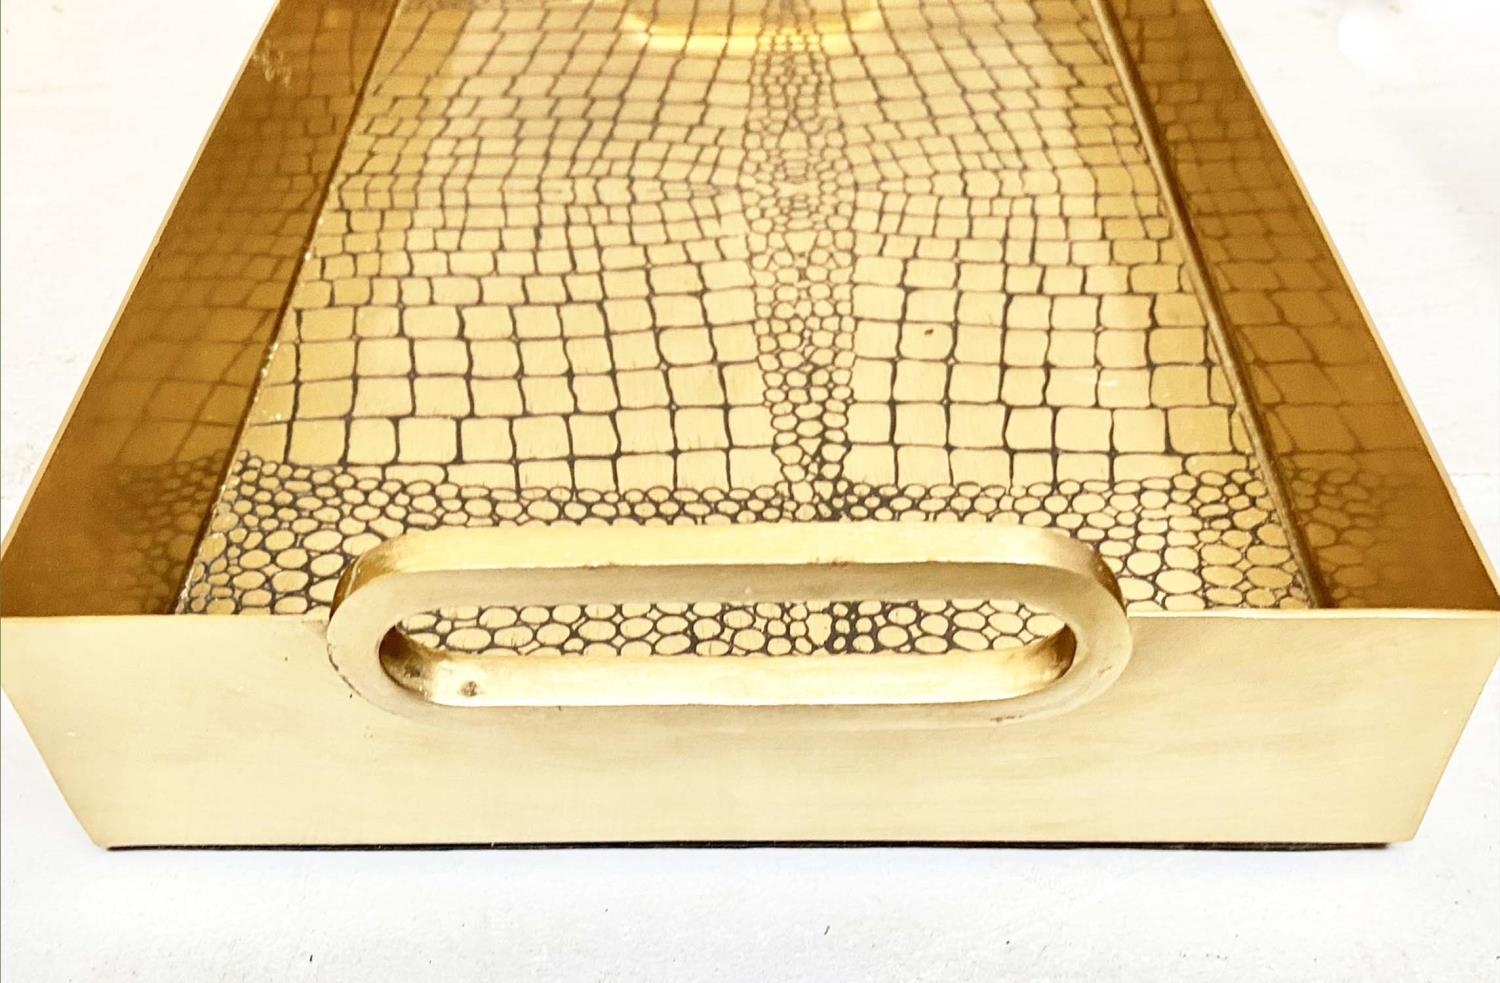 COCKTAIL TRAYS, a pair, faux crocodile embossed gilt metal design, 8cm x 49cm x 23cm. (2) - Image 2 of 4